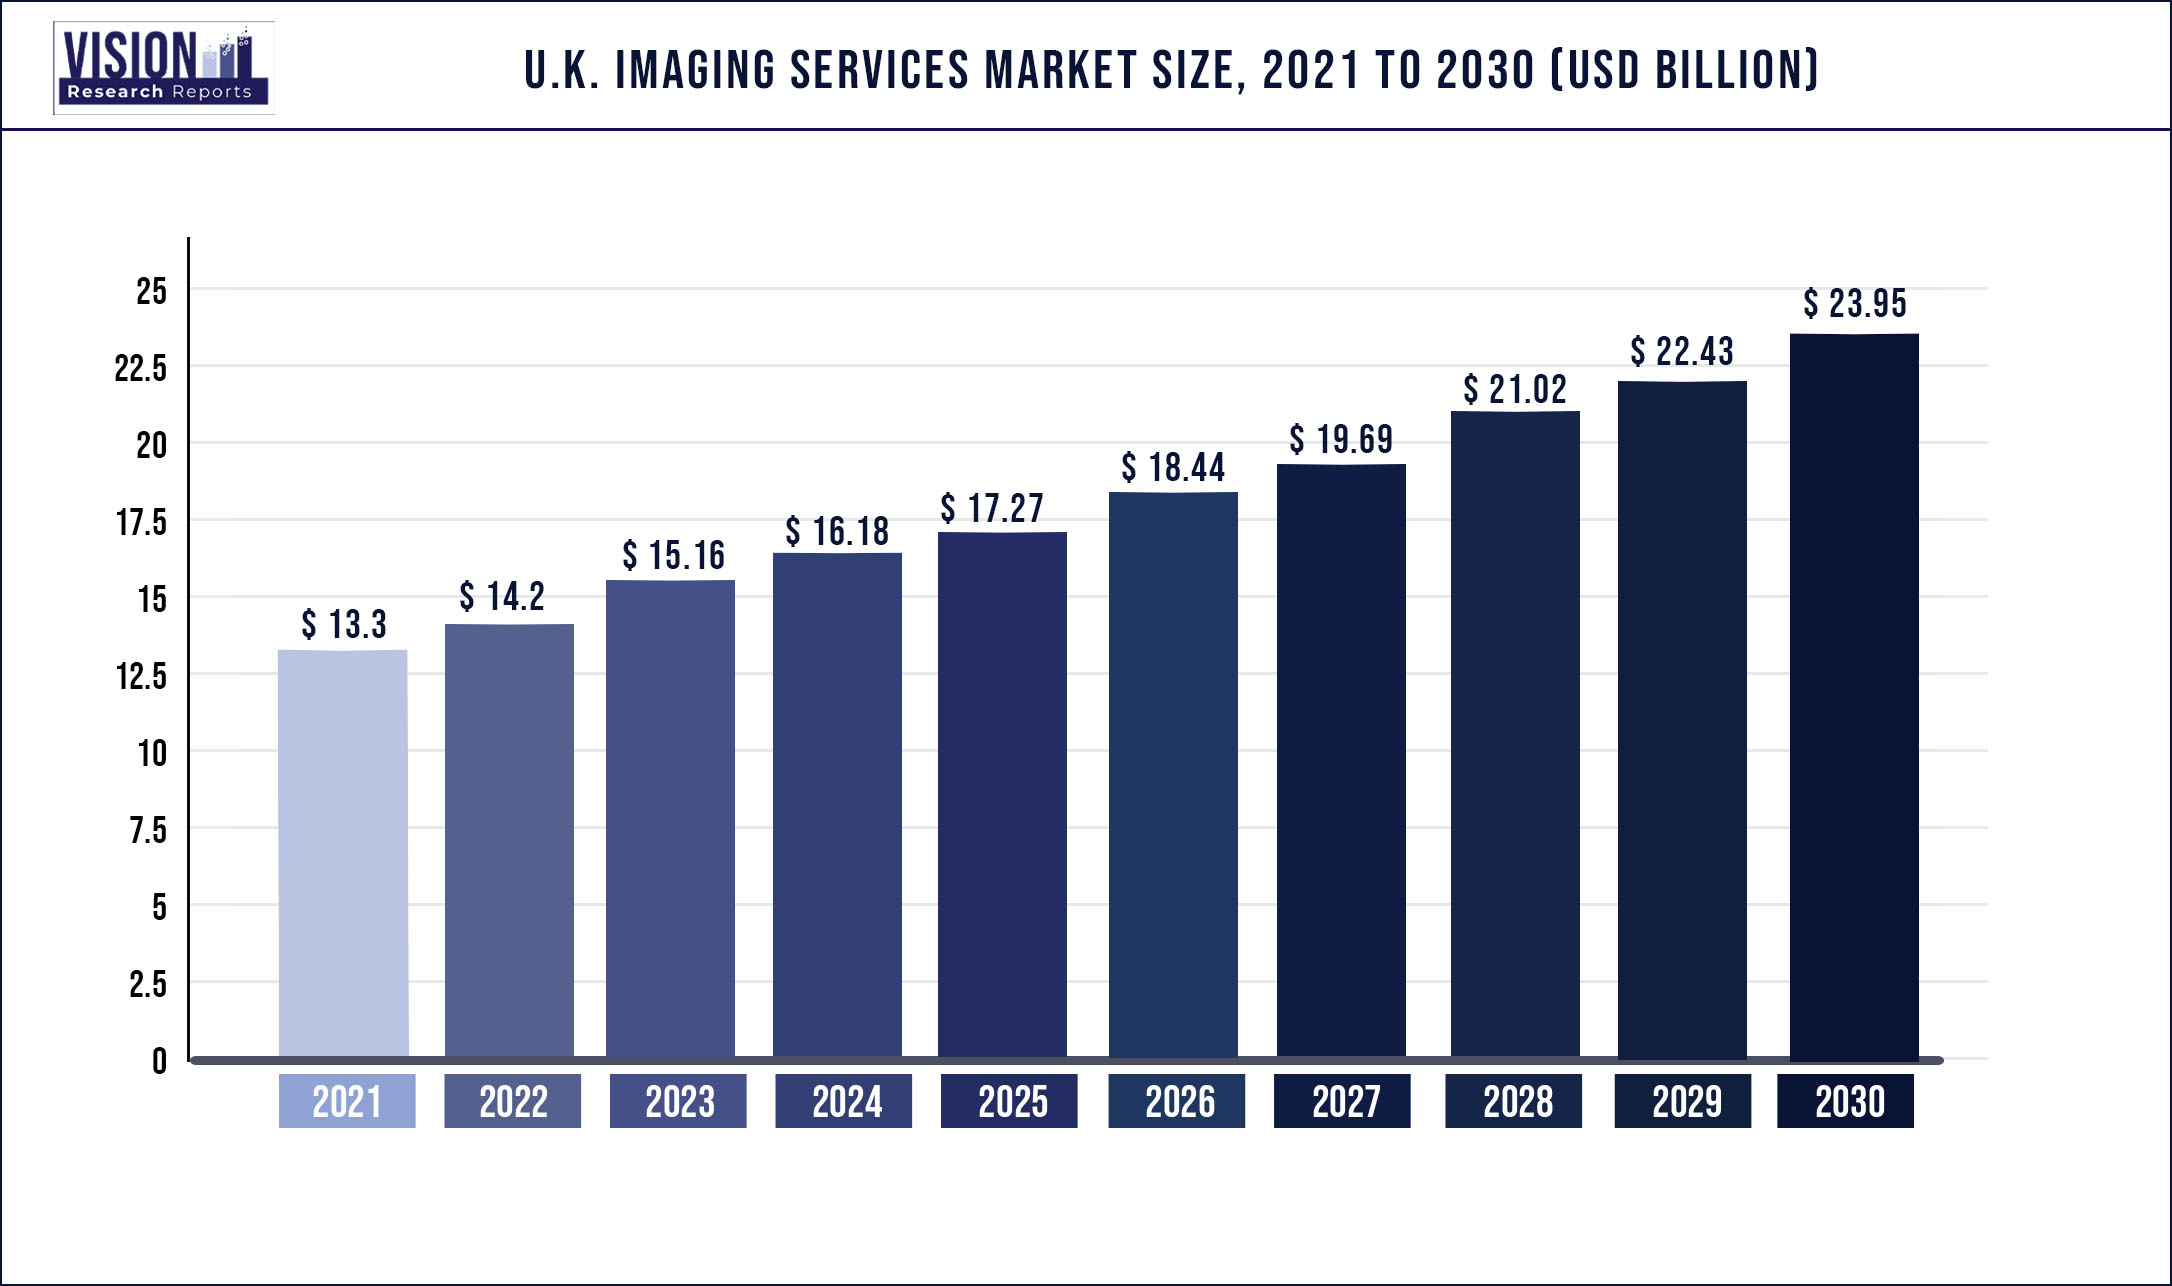 U.K. Imaging Services Market Size 2021 to 2030